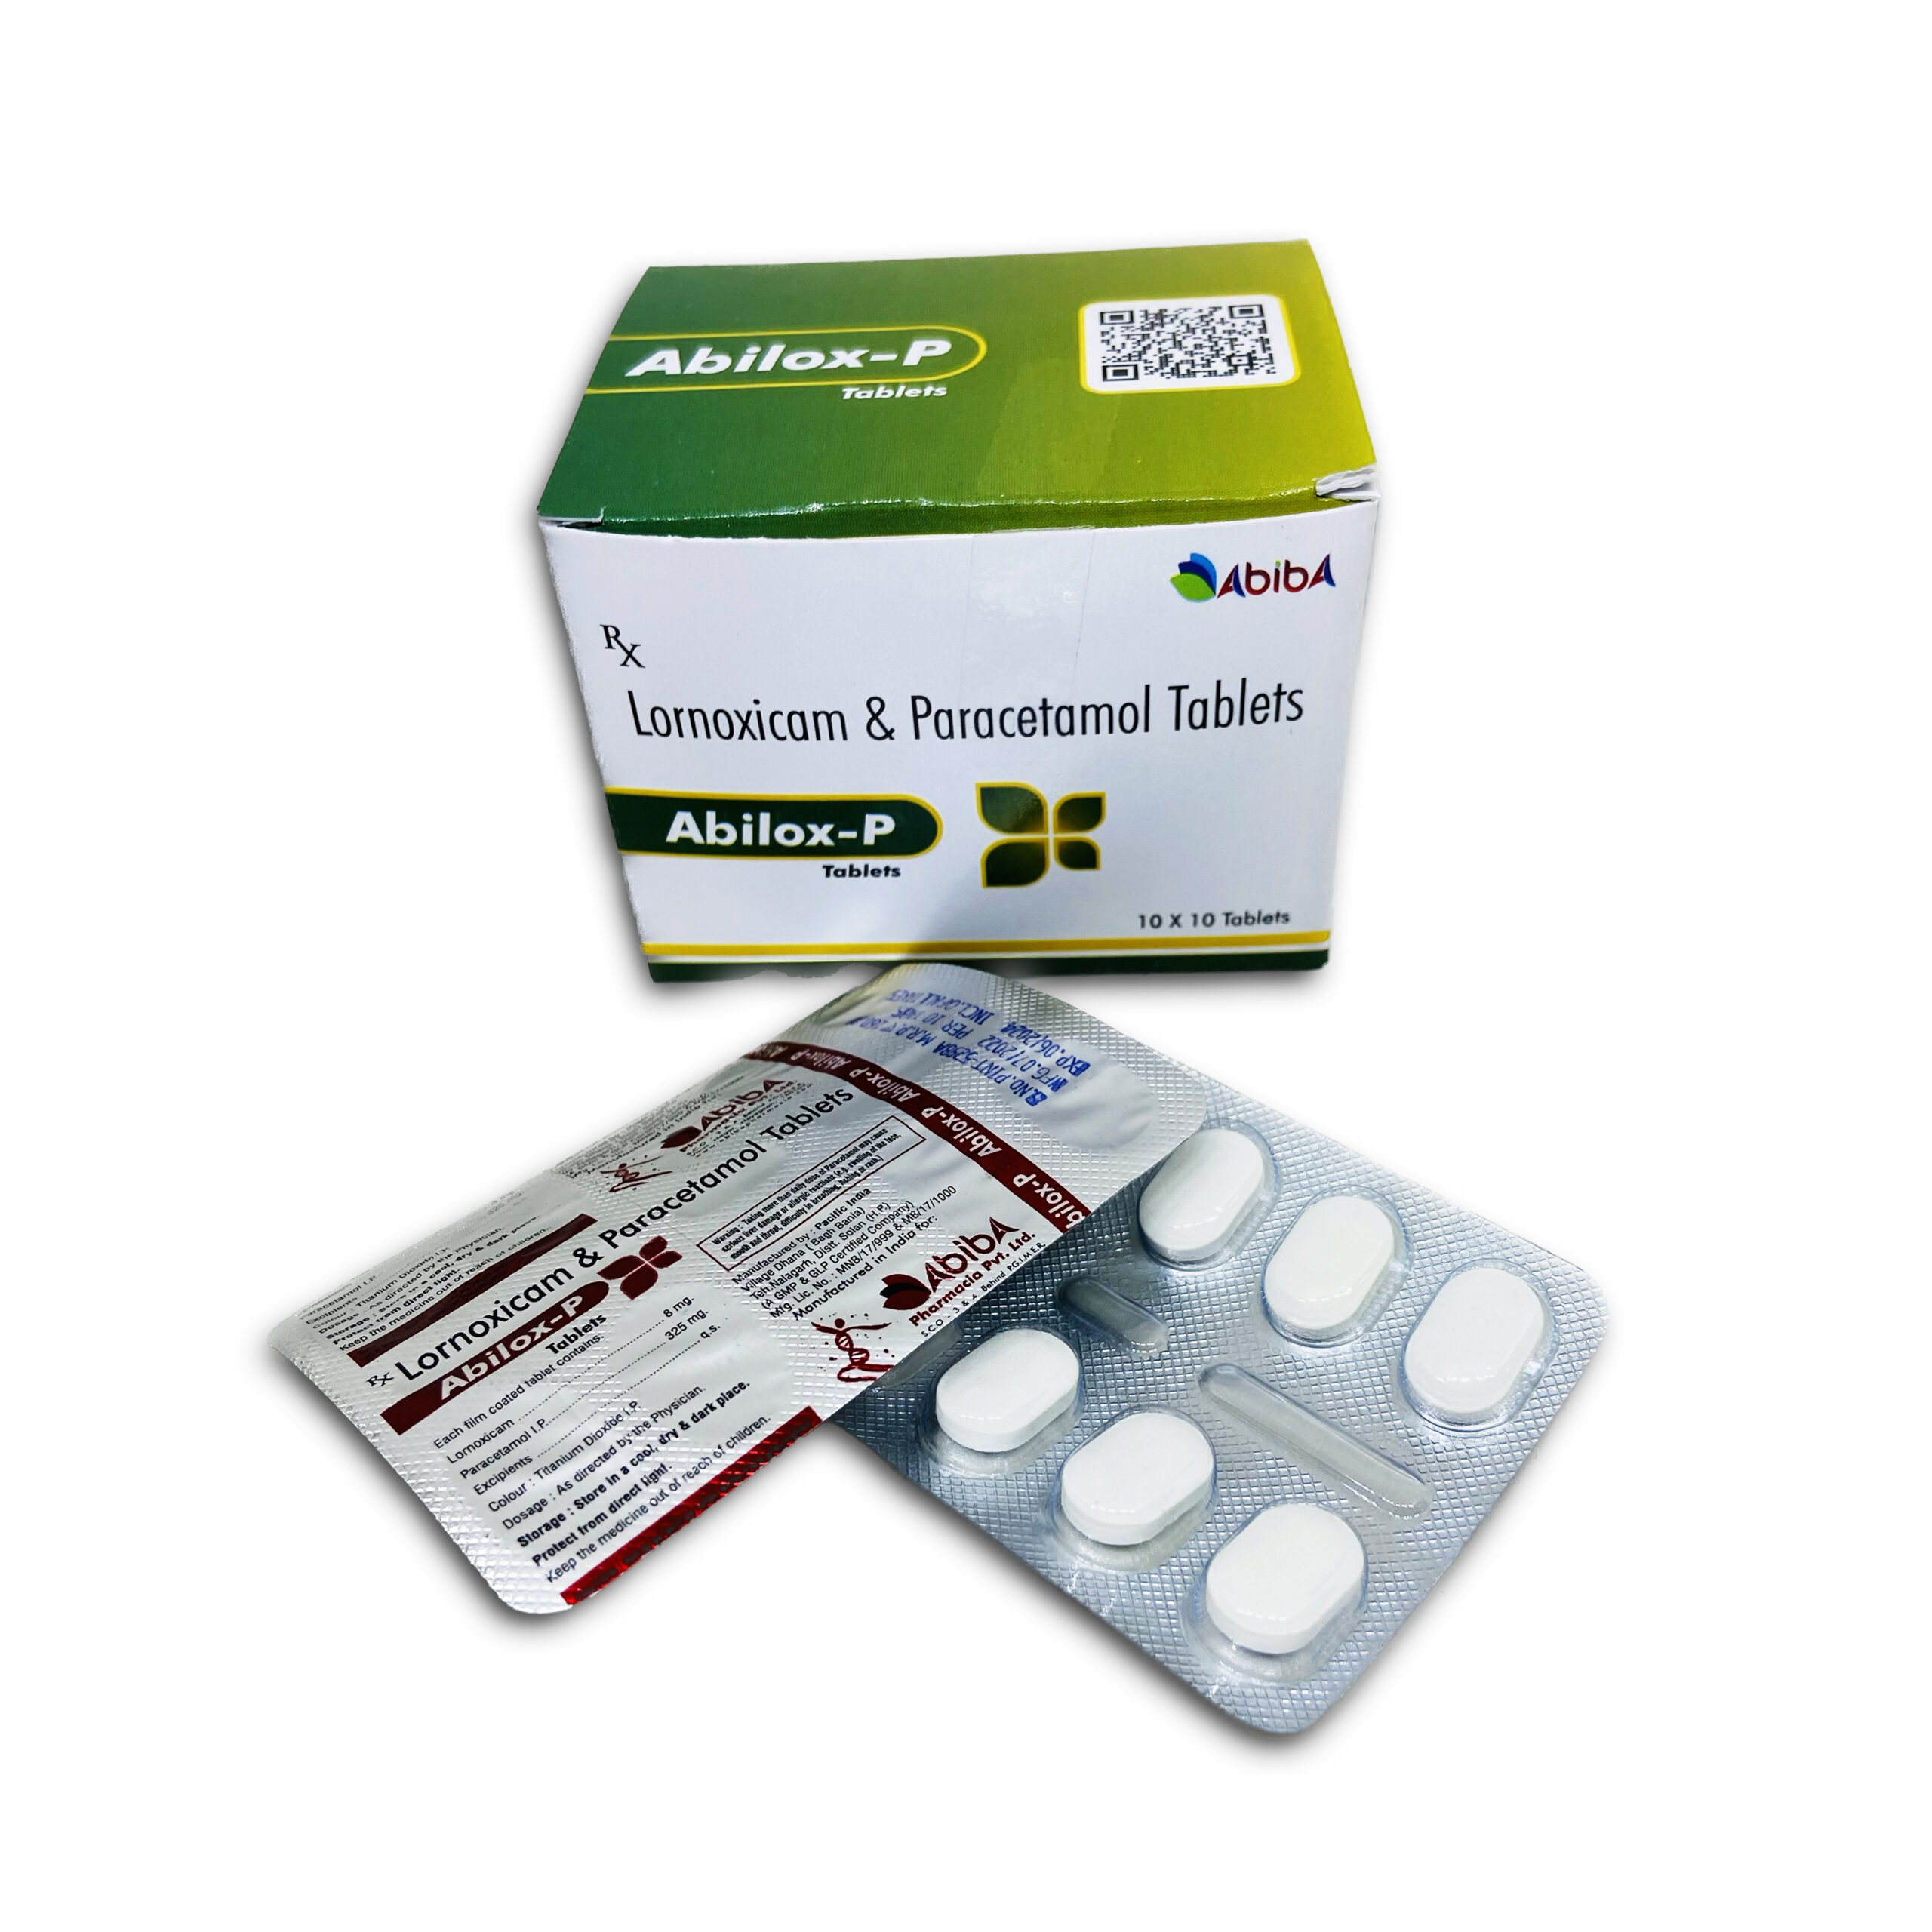 Lornoxicam 8 mg + Paracetamol 325 mg Tablets